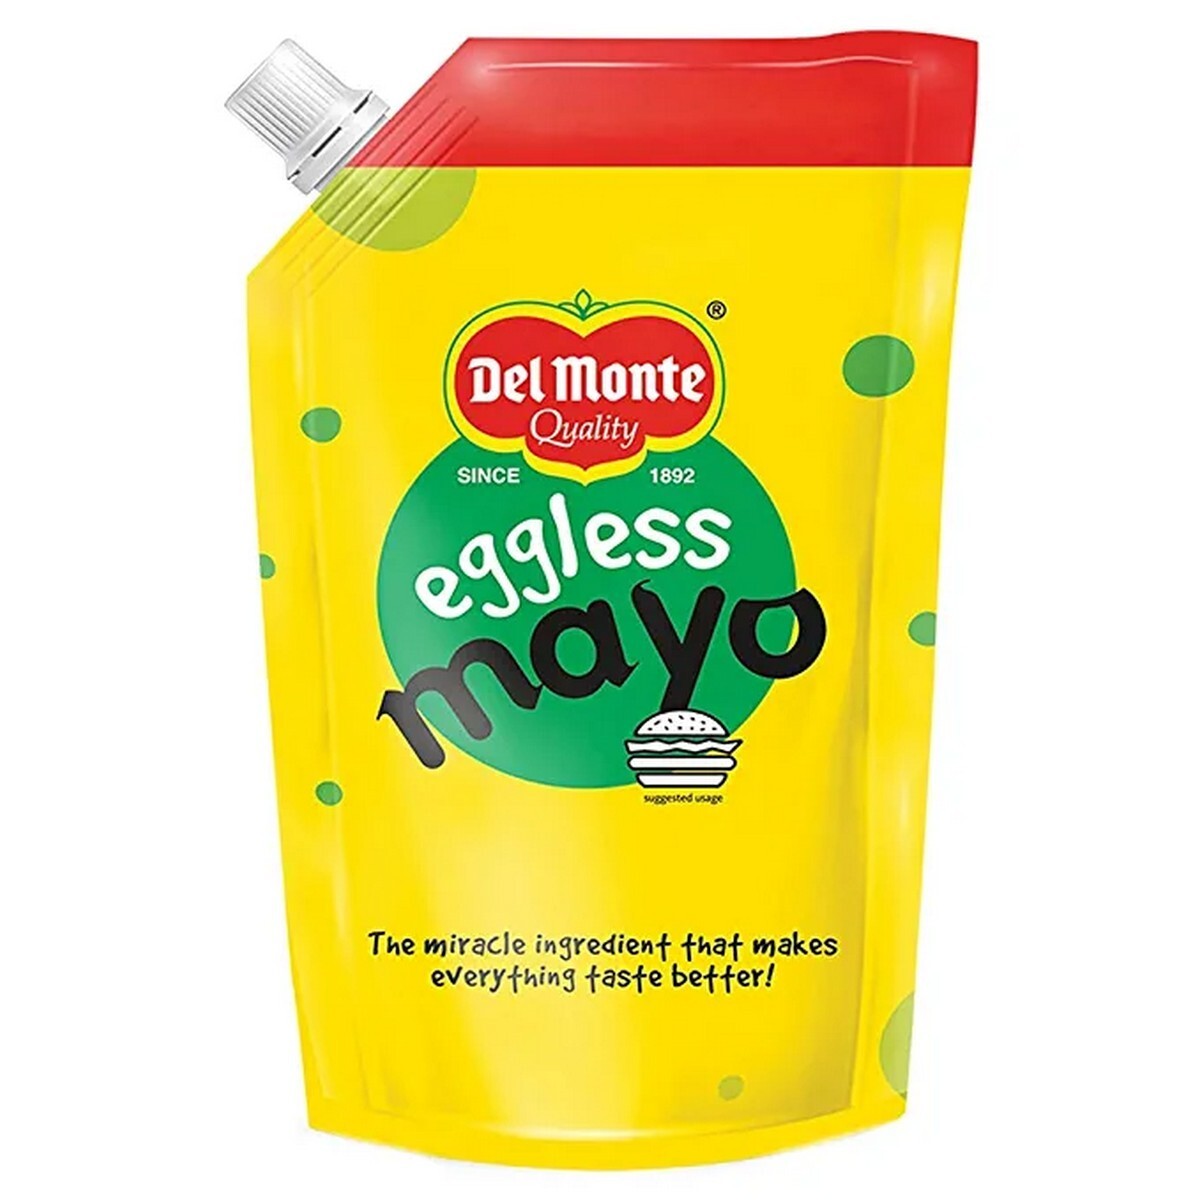 Delmonte Eggless Mayannaise 900g